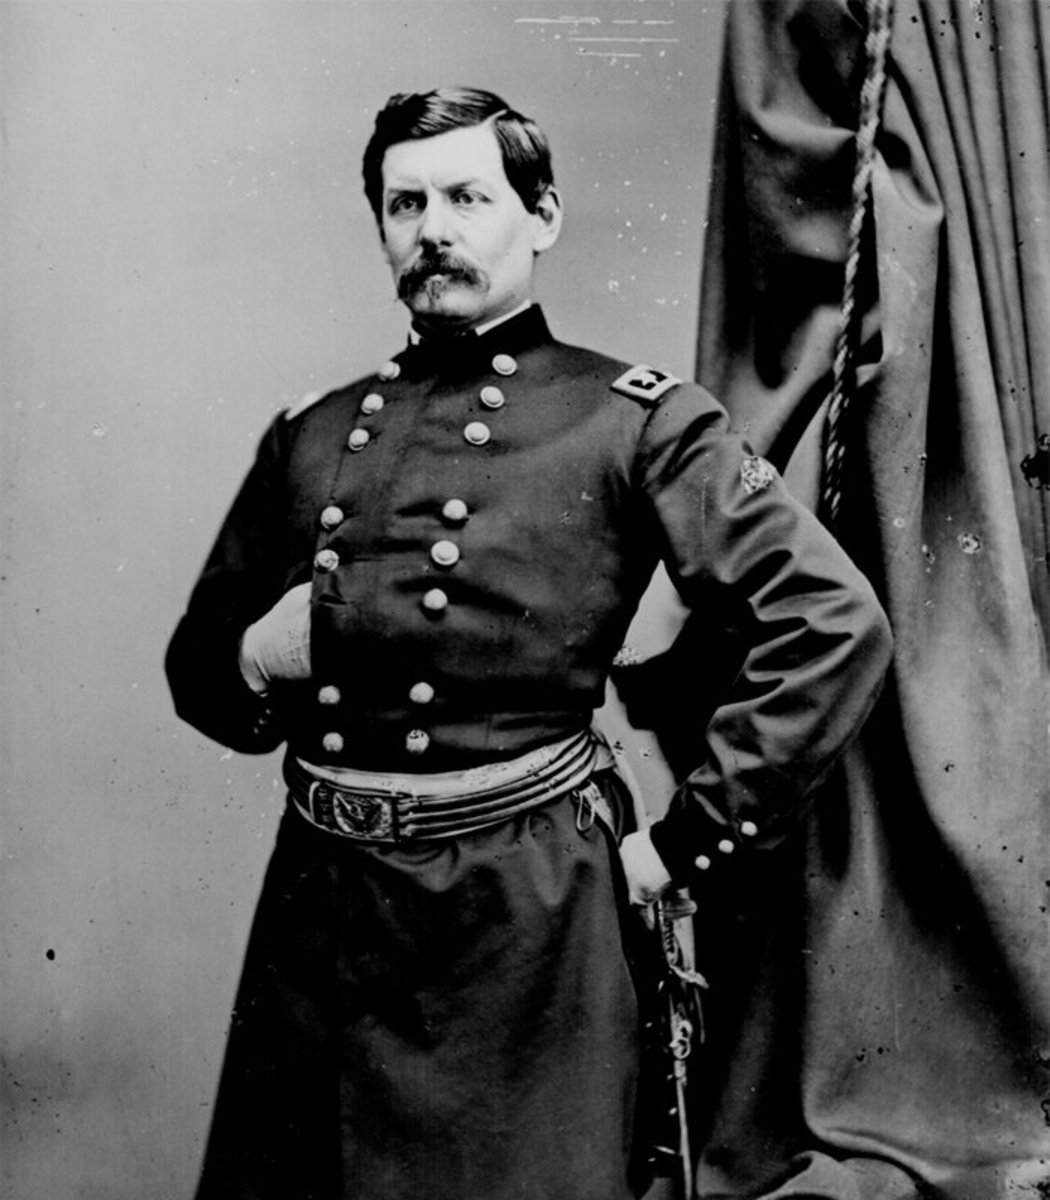 Major General George McClellan